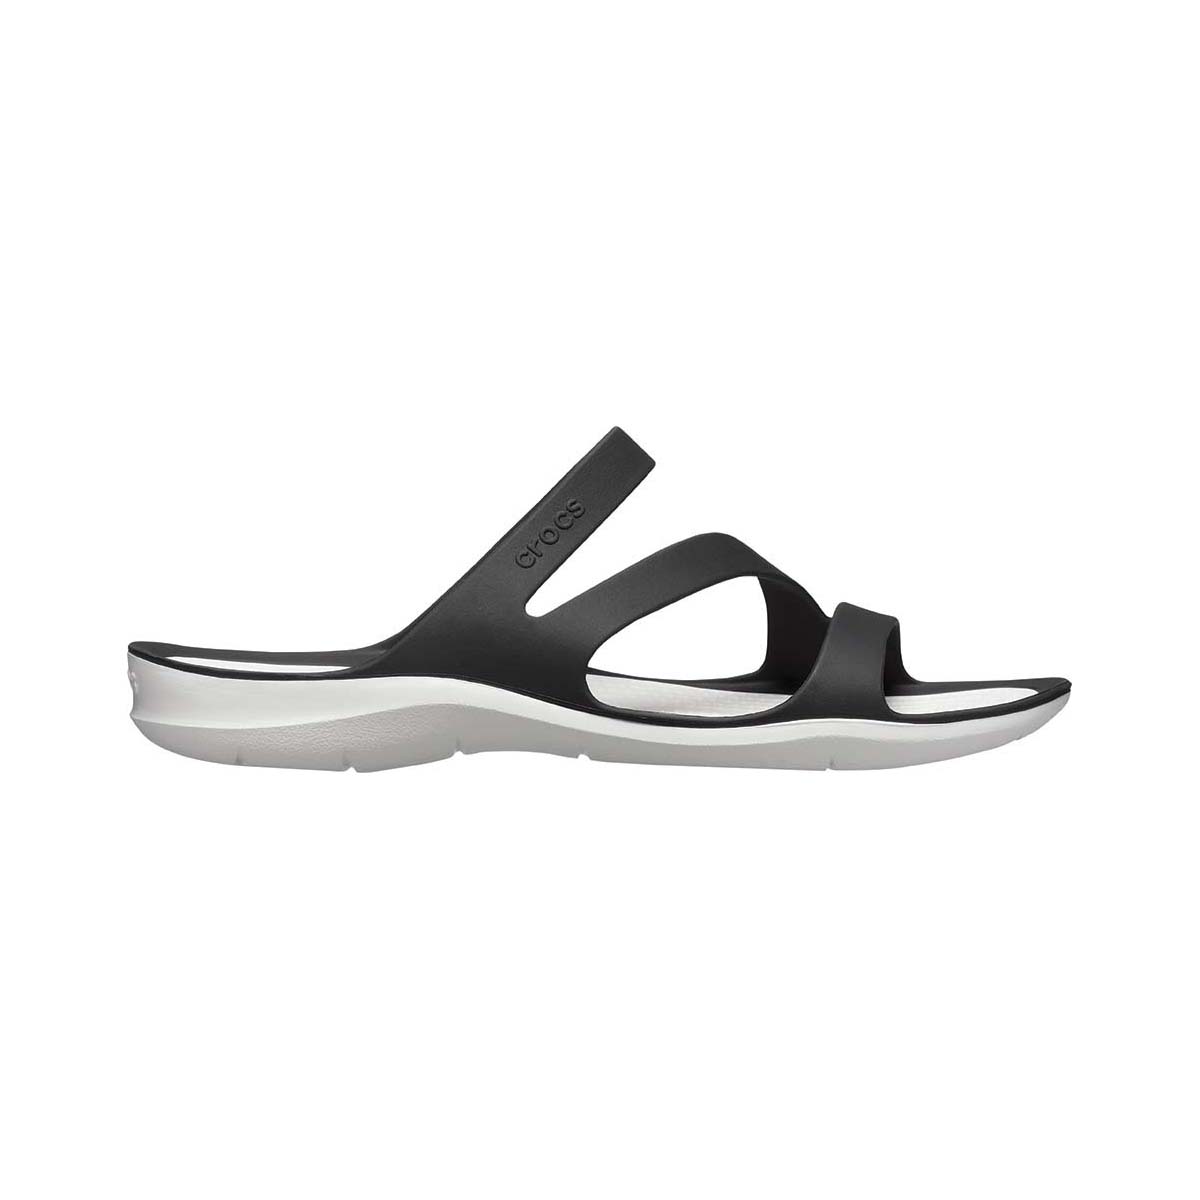 Crocs Women's Swiftwater Sandals W11